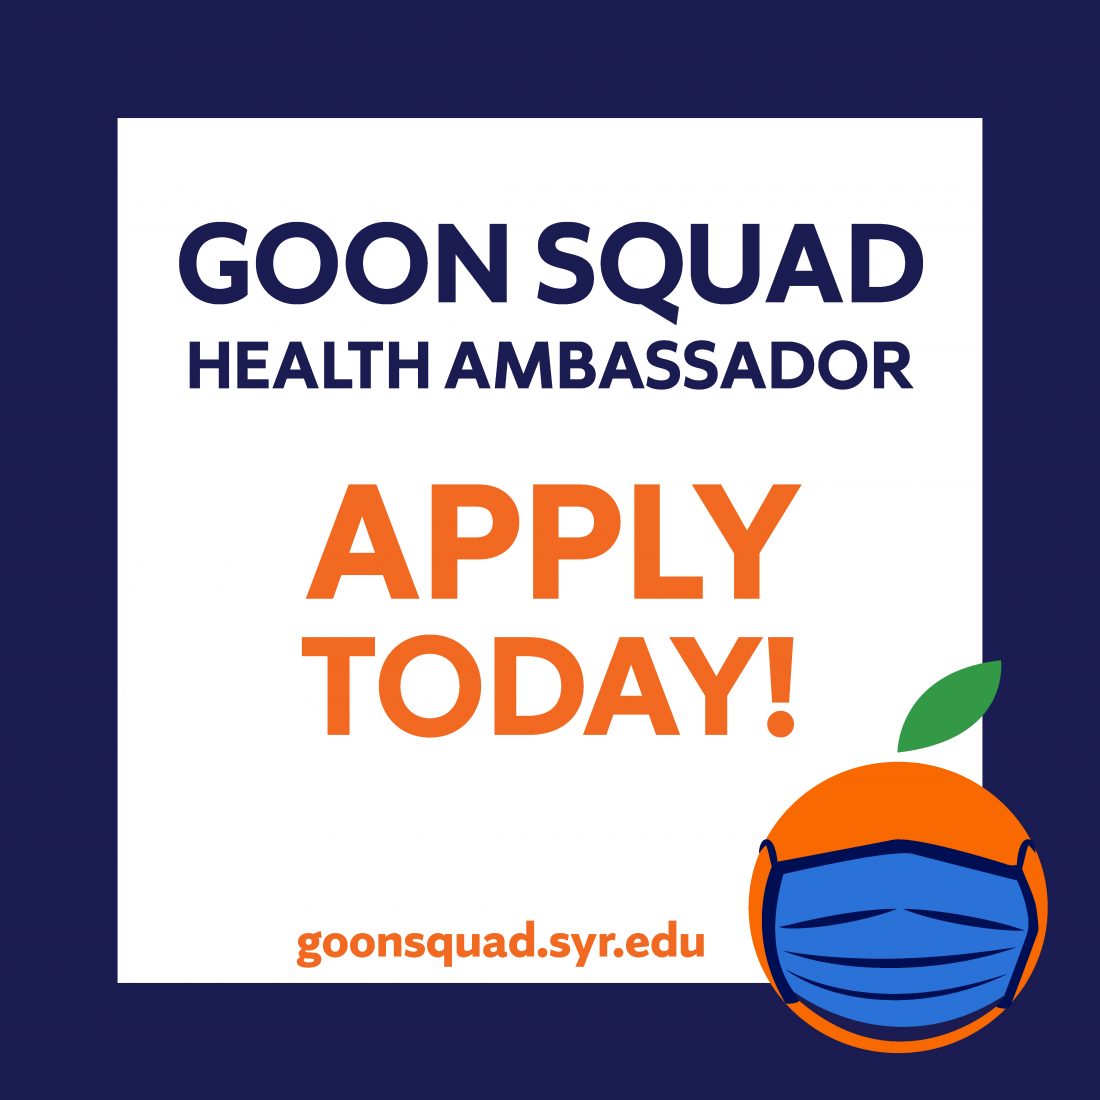 Goon Squad Health Ambassador Apply Today! goonsquad.syr.edu